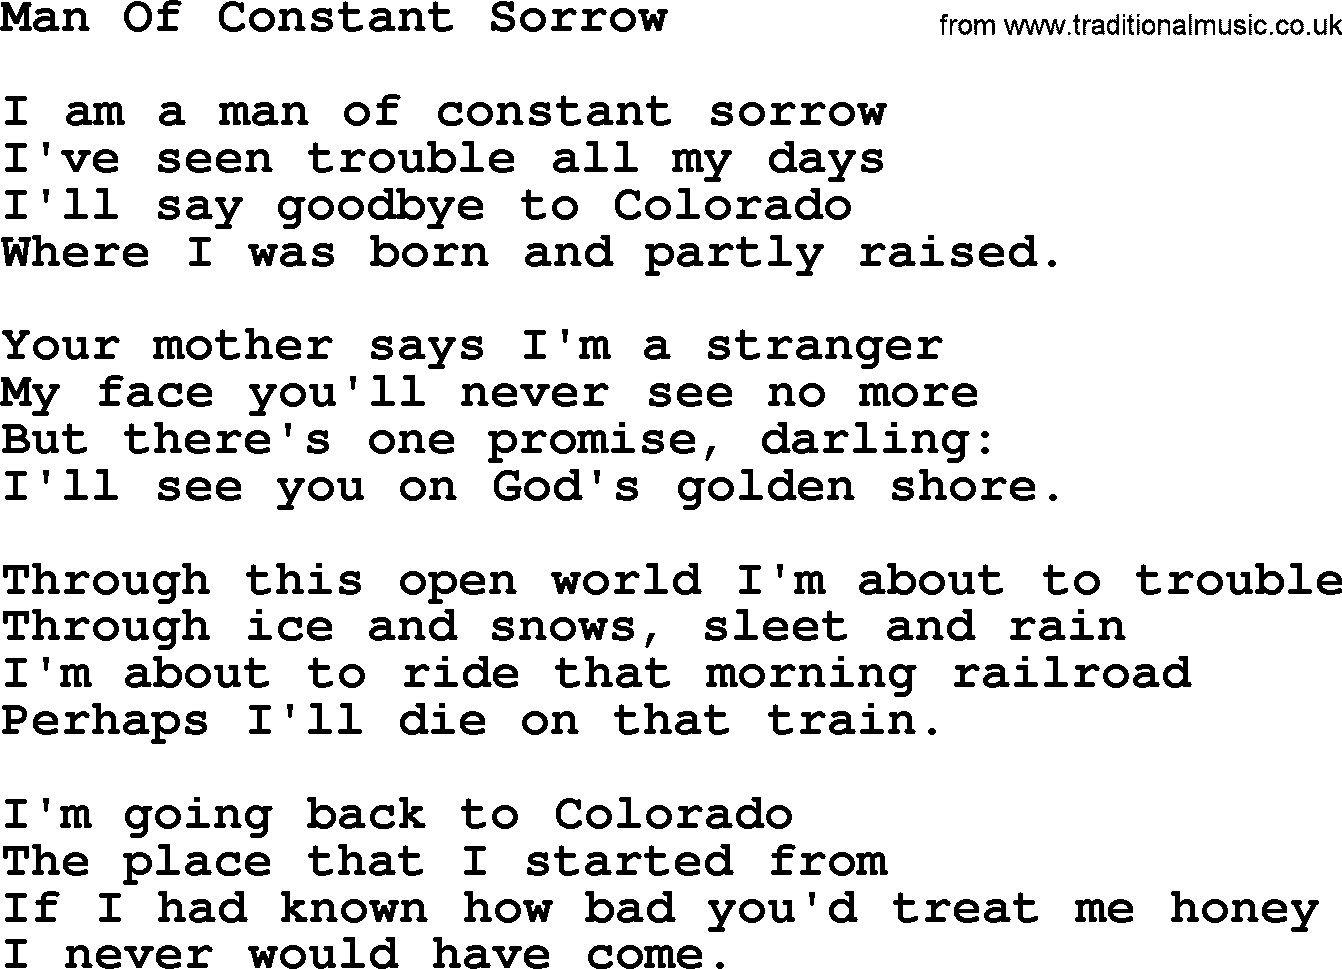 Joan Baez song Man Of Constant Sorrow, lyrics